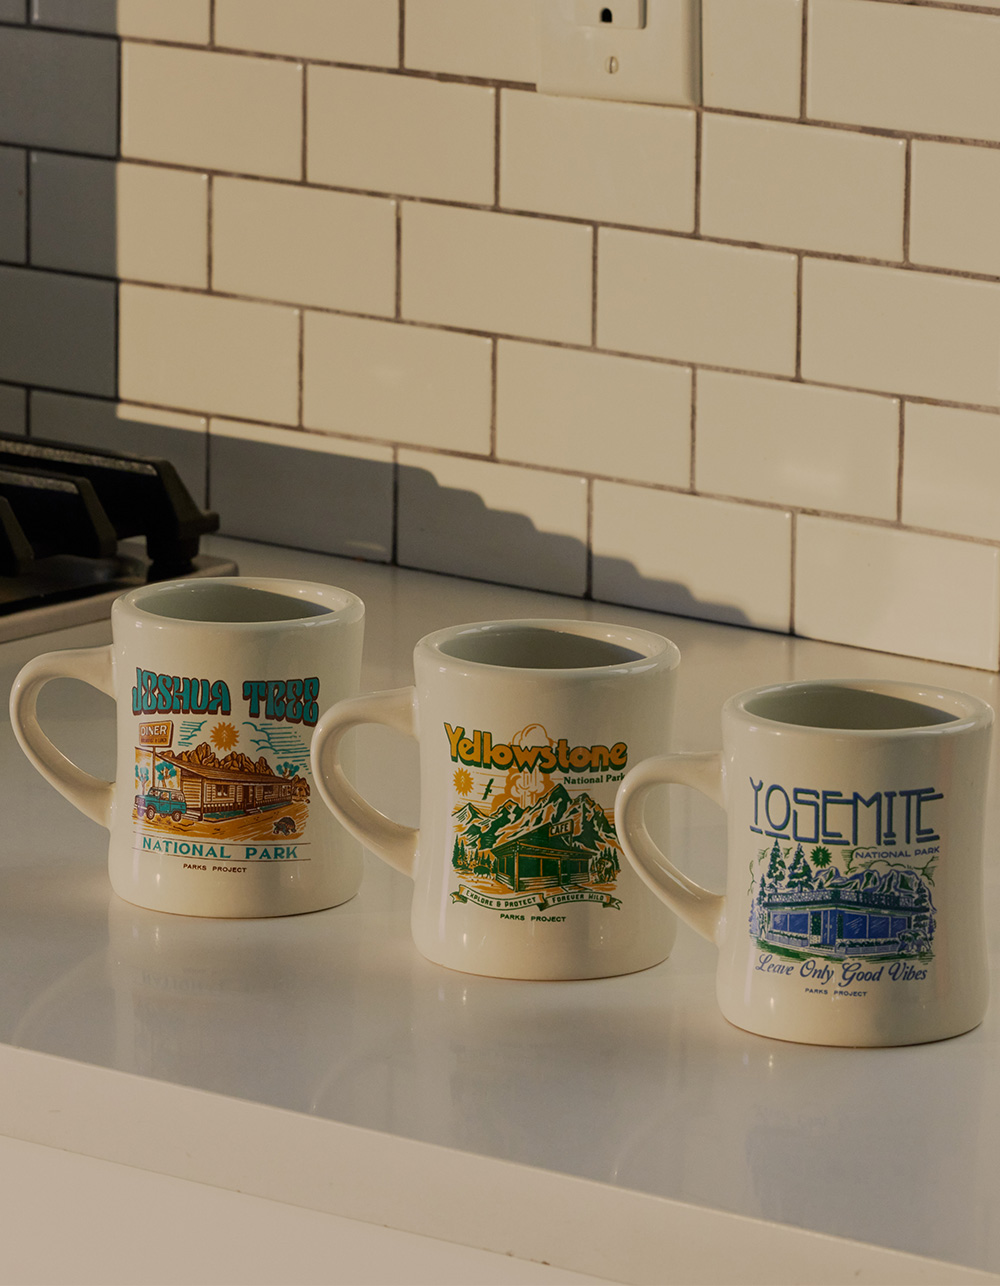 Insulated Coffee Mug, 10oz - Ward Park Place Homes Association Website